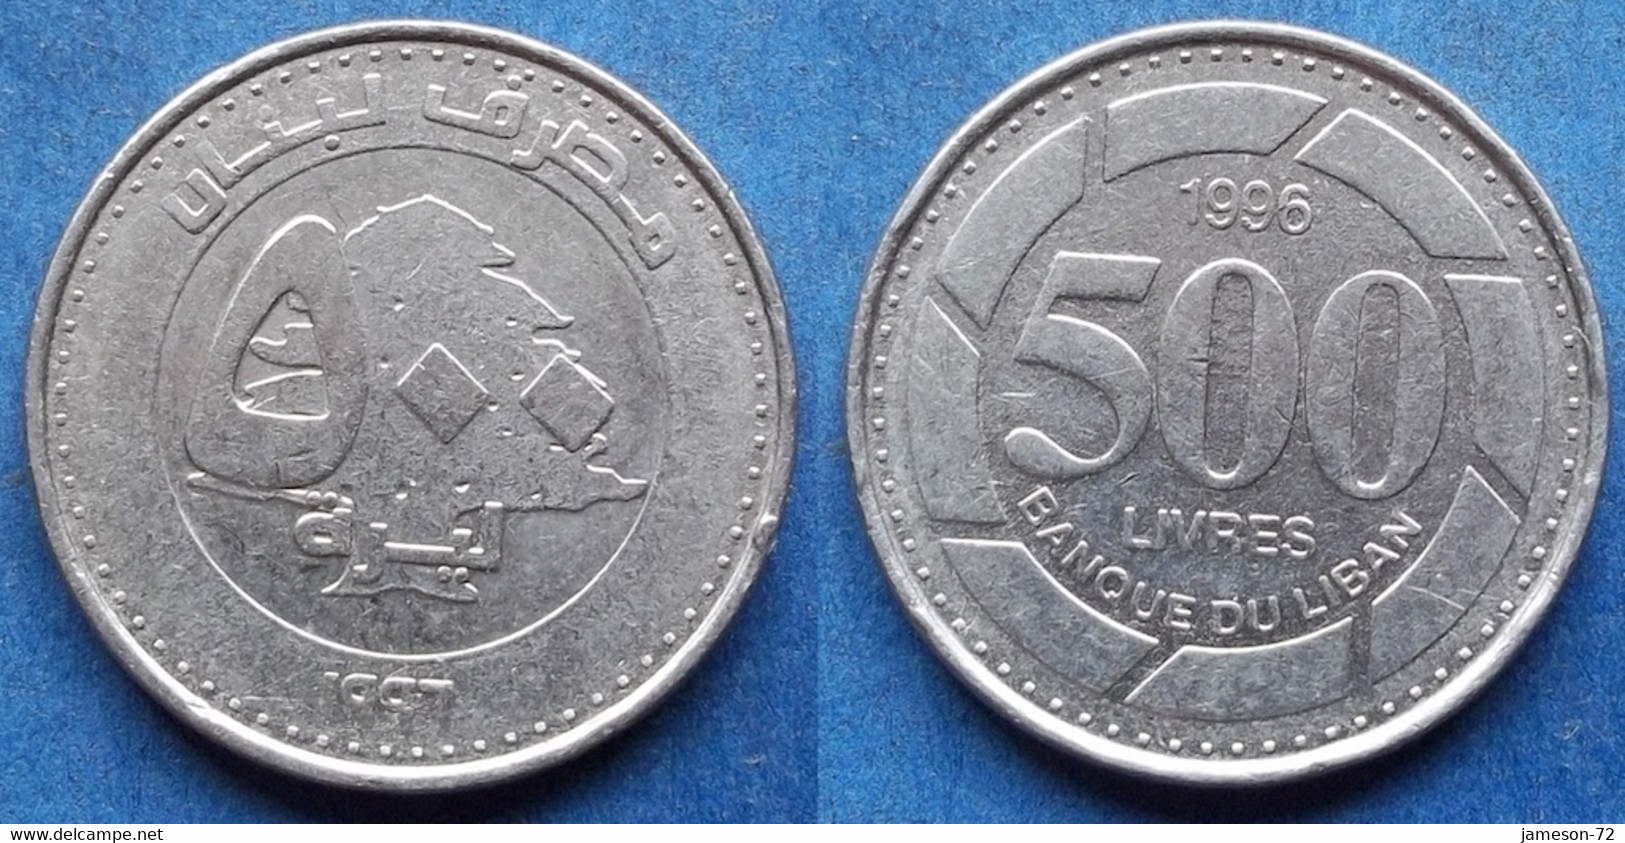 LEBANON - 500 Livres 1996 KM# 39 Independent Republic Asia - Edelweiss Coins - Lebanon